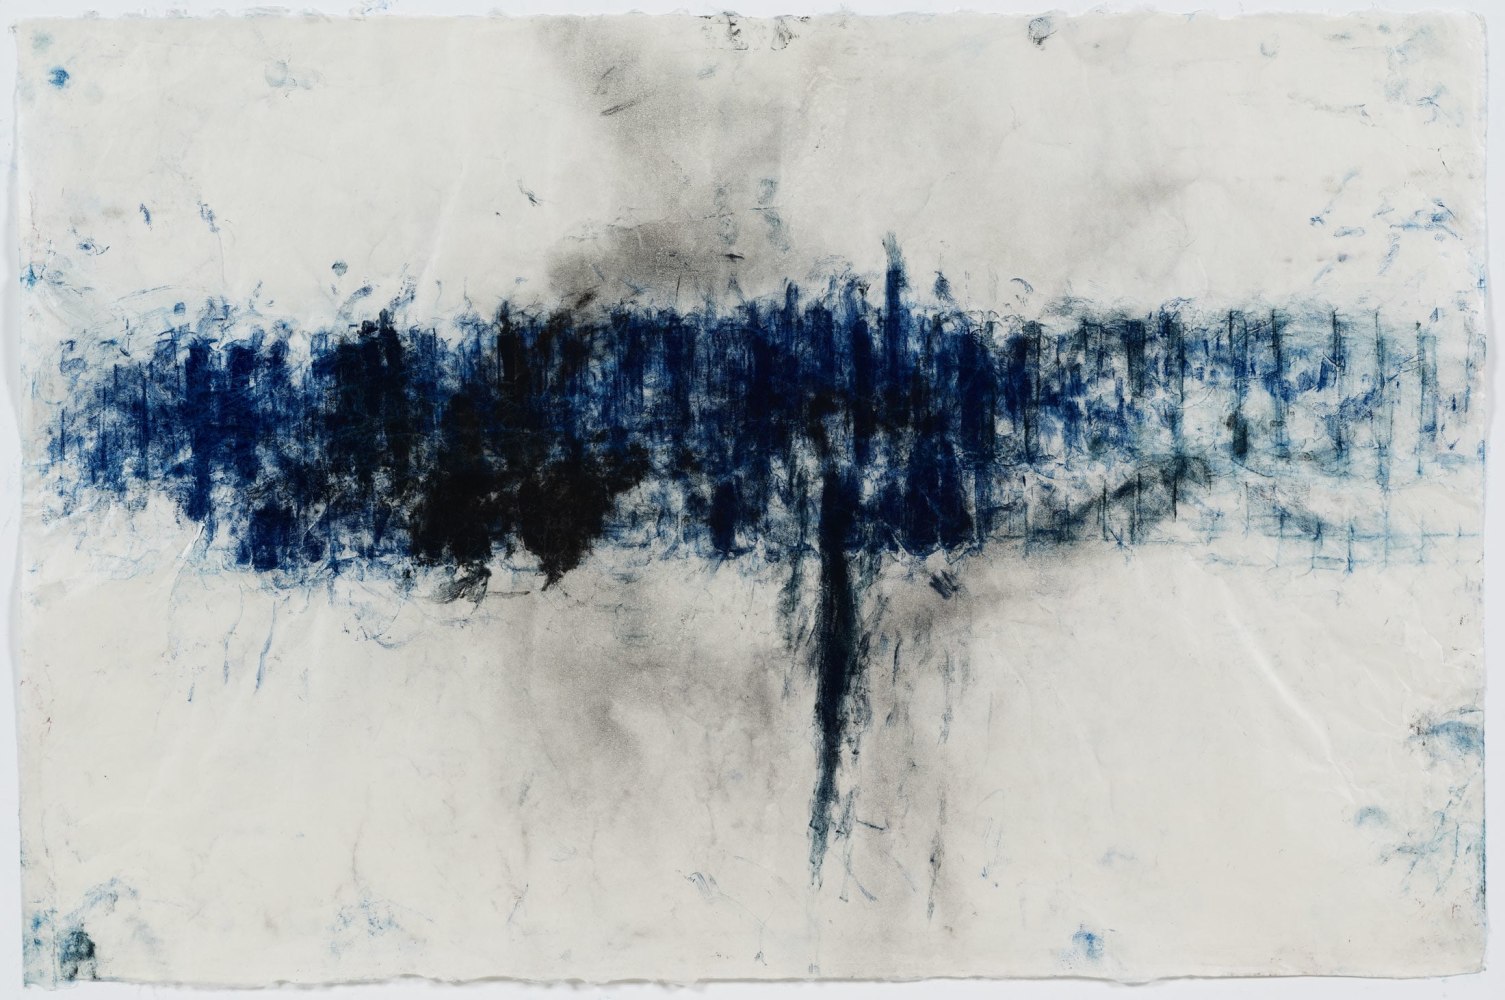 Jason Moran
Summon a Sound, 2020
Pigment on Gampi paper
25 1/8 x 38 1/4 inches
(63.8 x 97.2 cm)